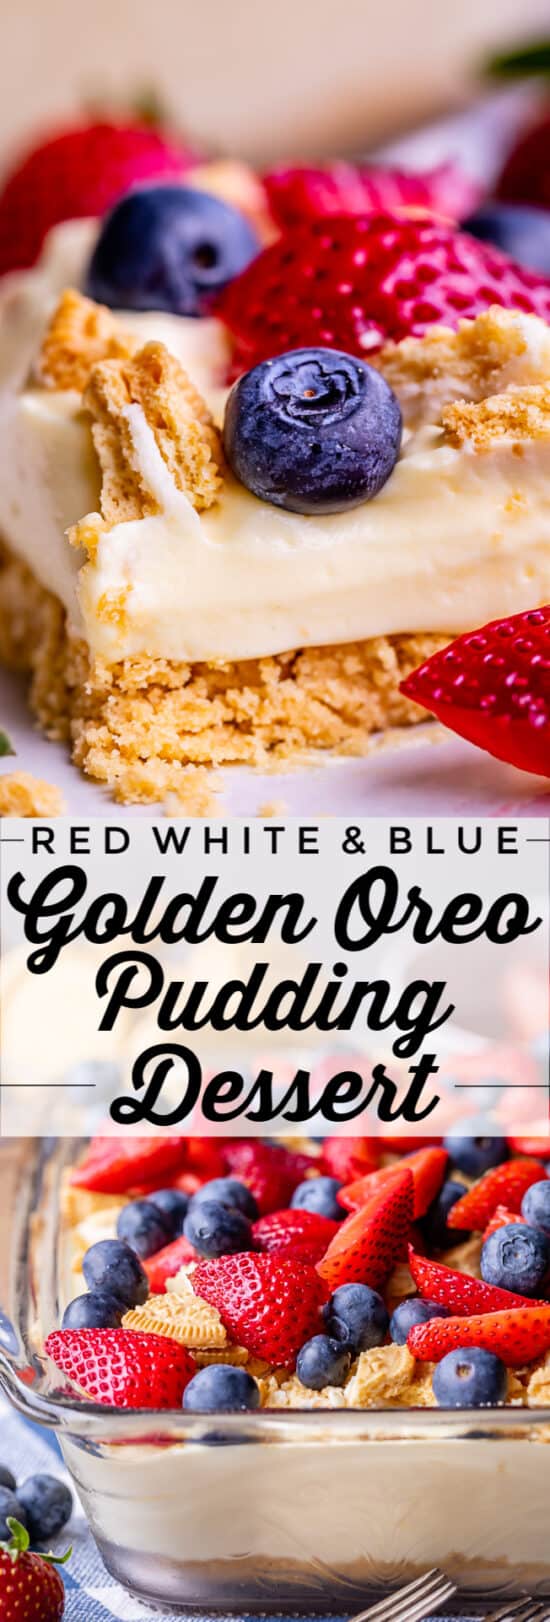 vanilla pudding dessert with golden oreos